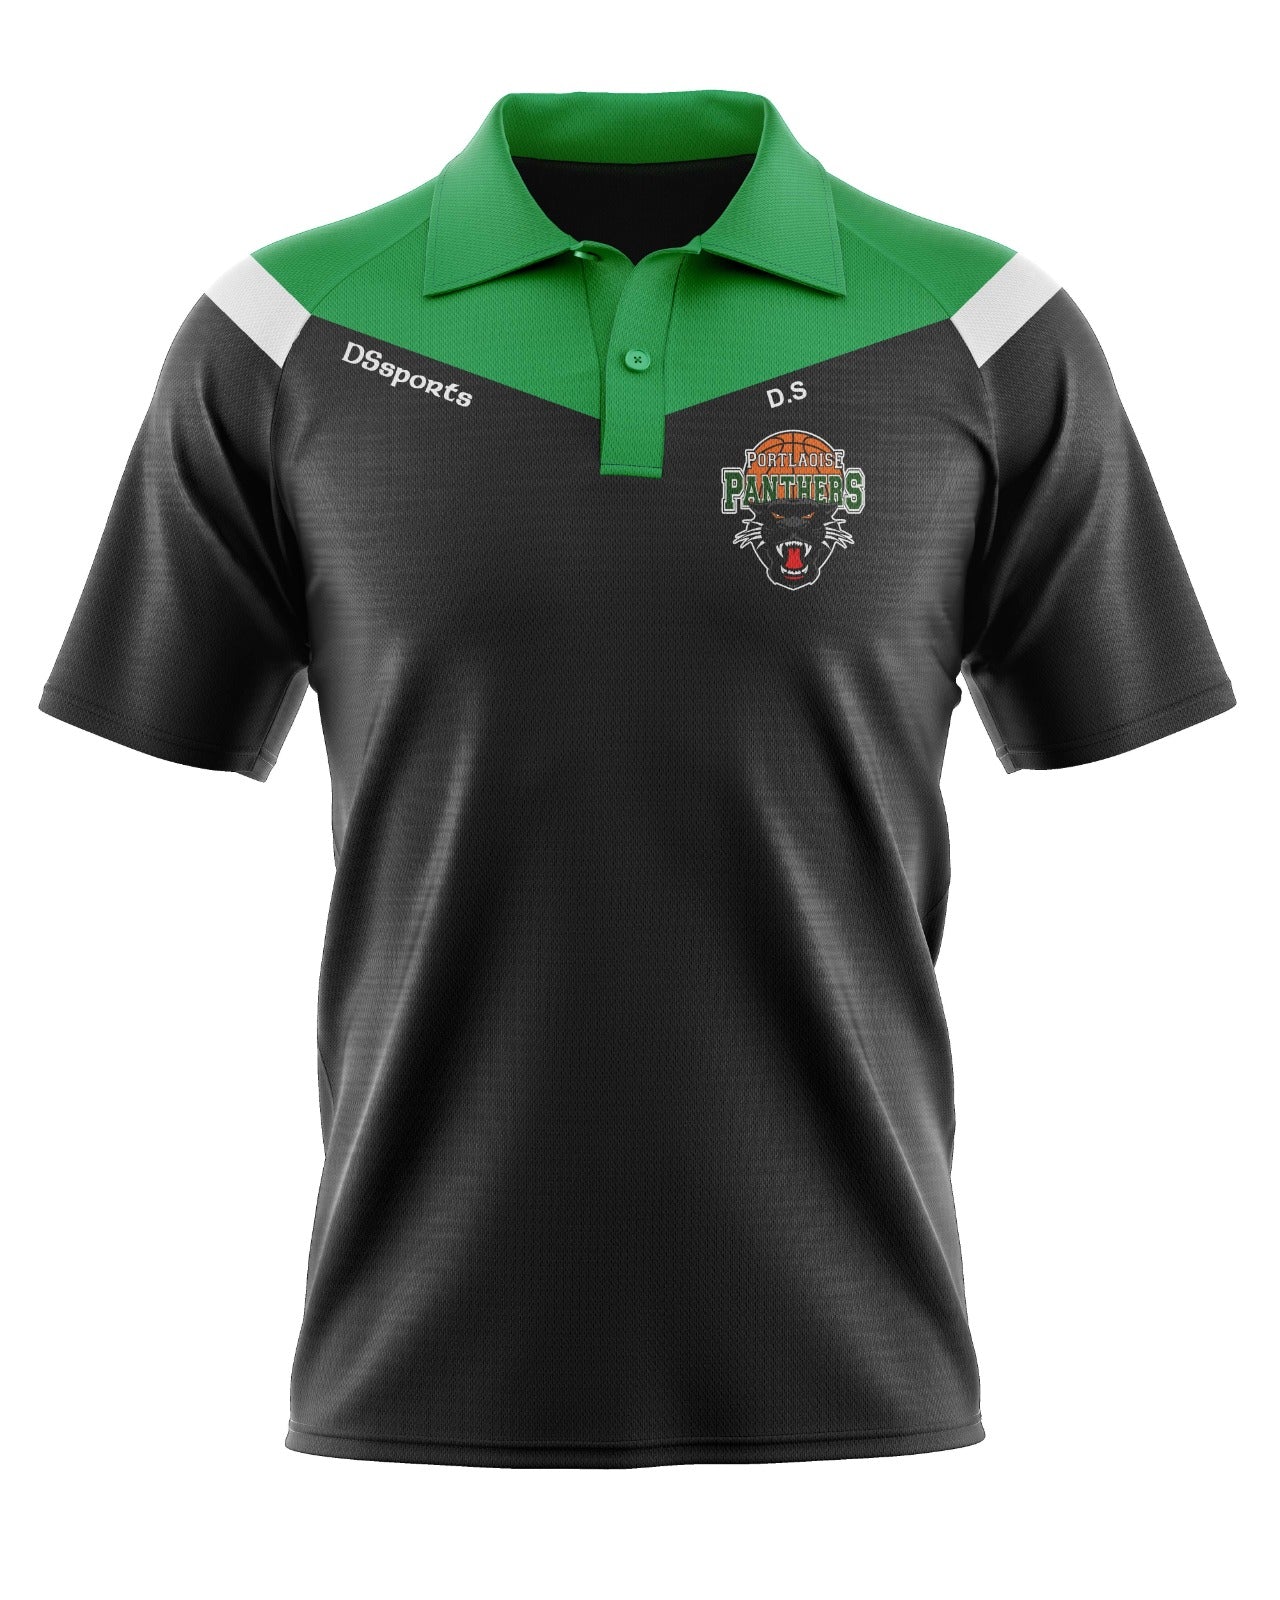 Portlaoise Panthers - Polo Shirt